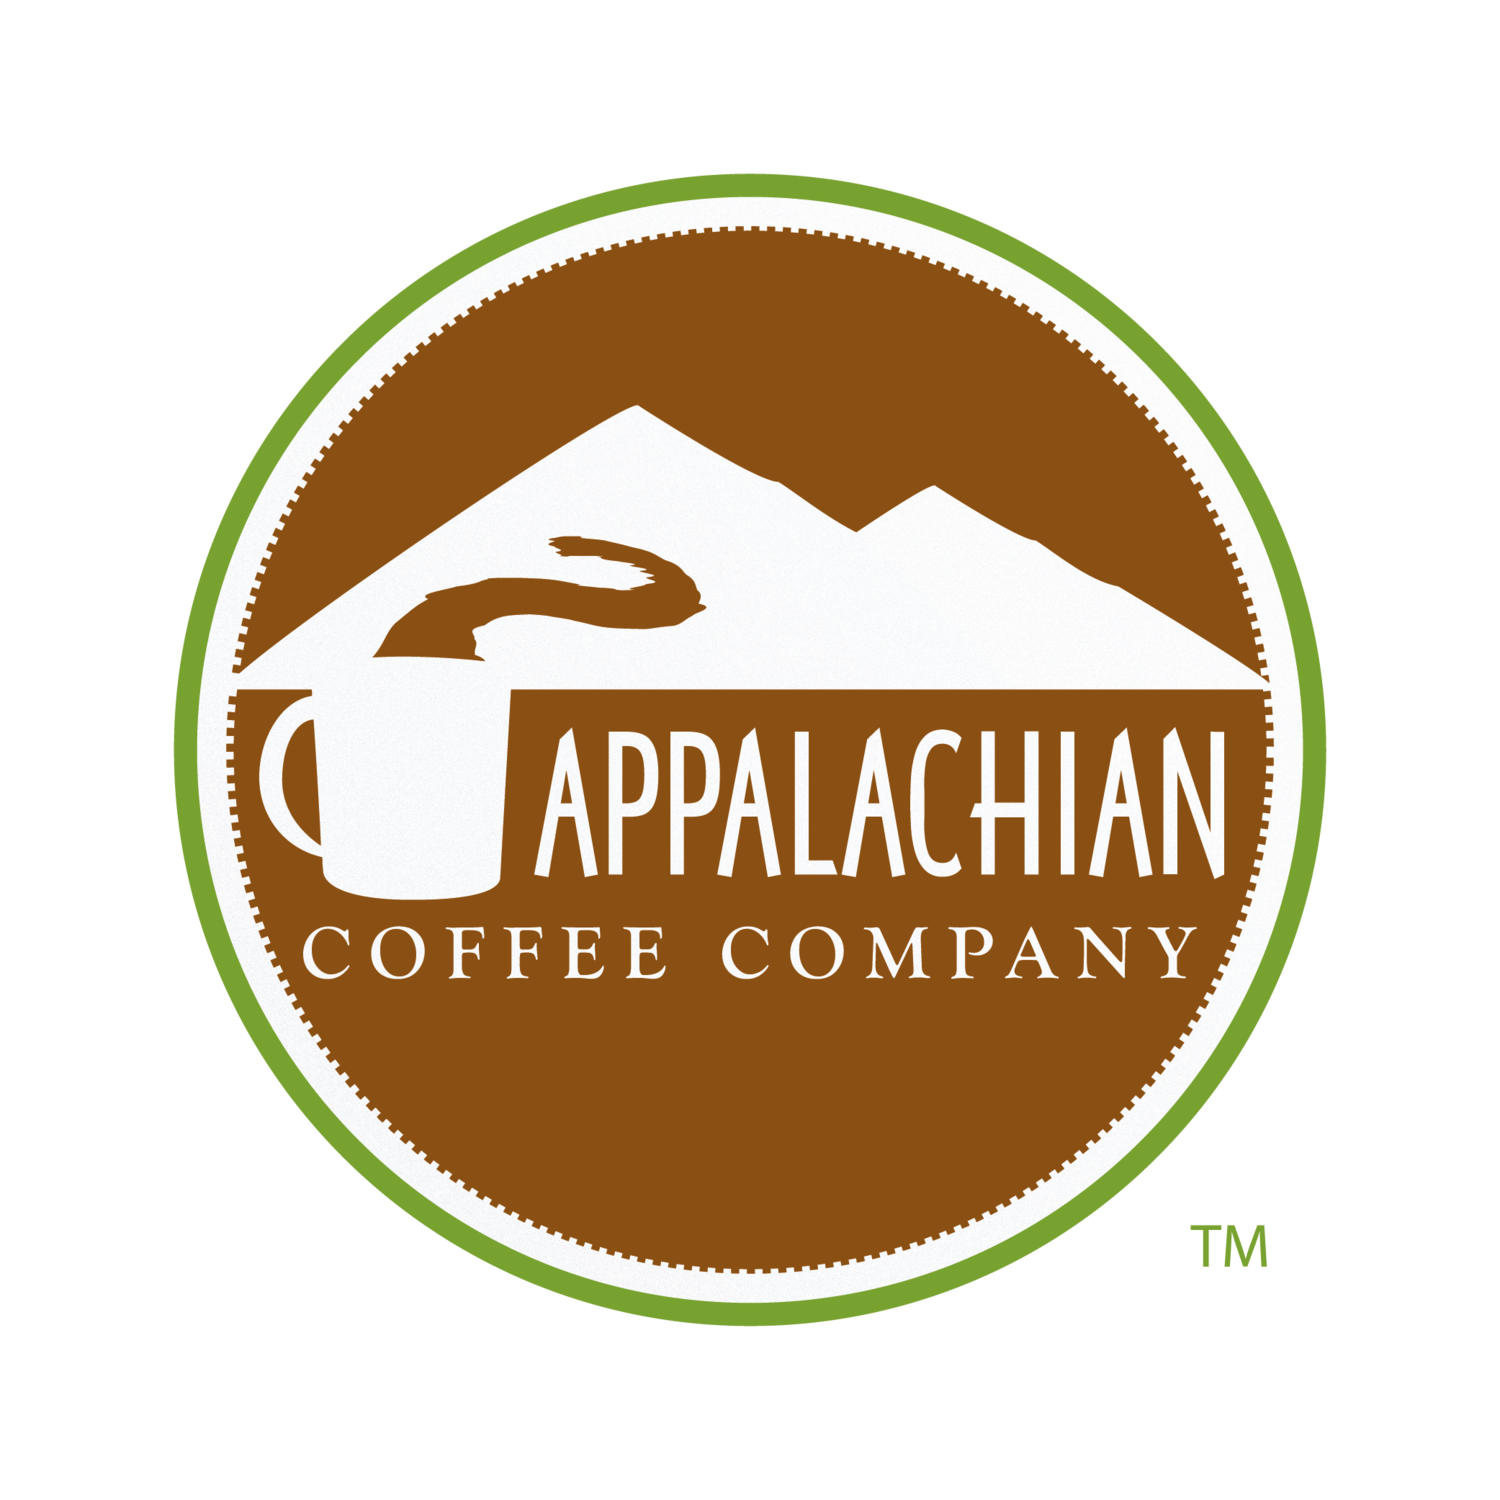 Appalachian Coffee Company